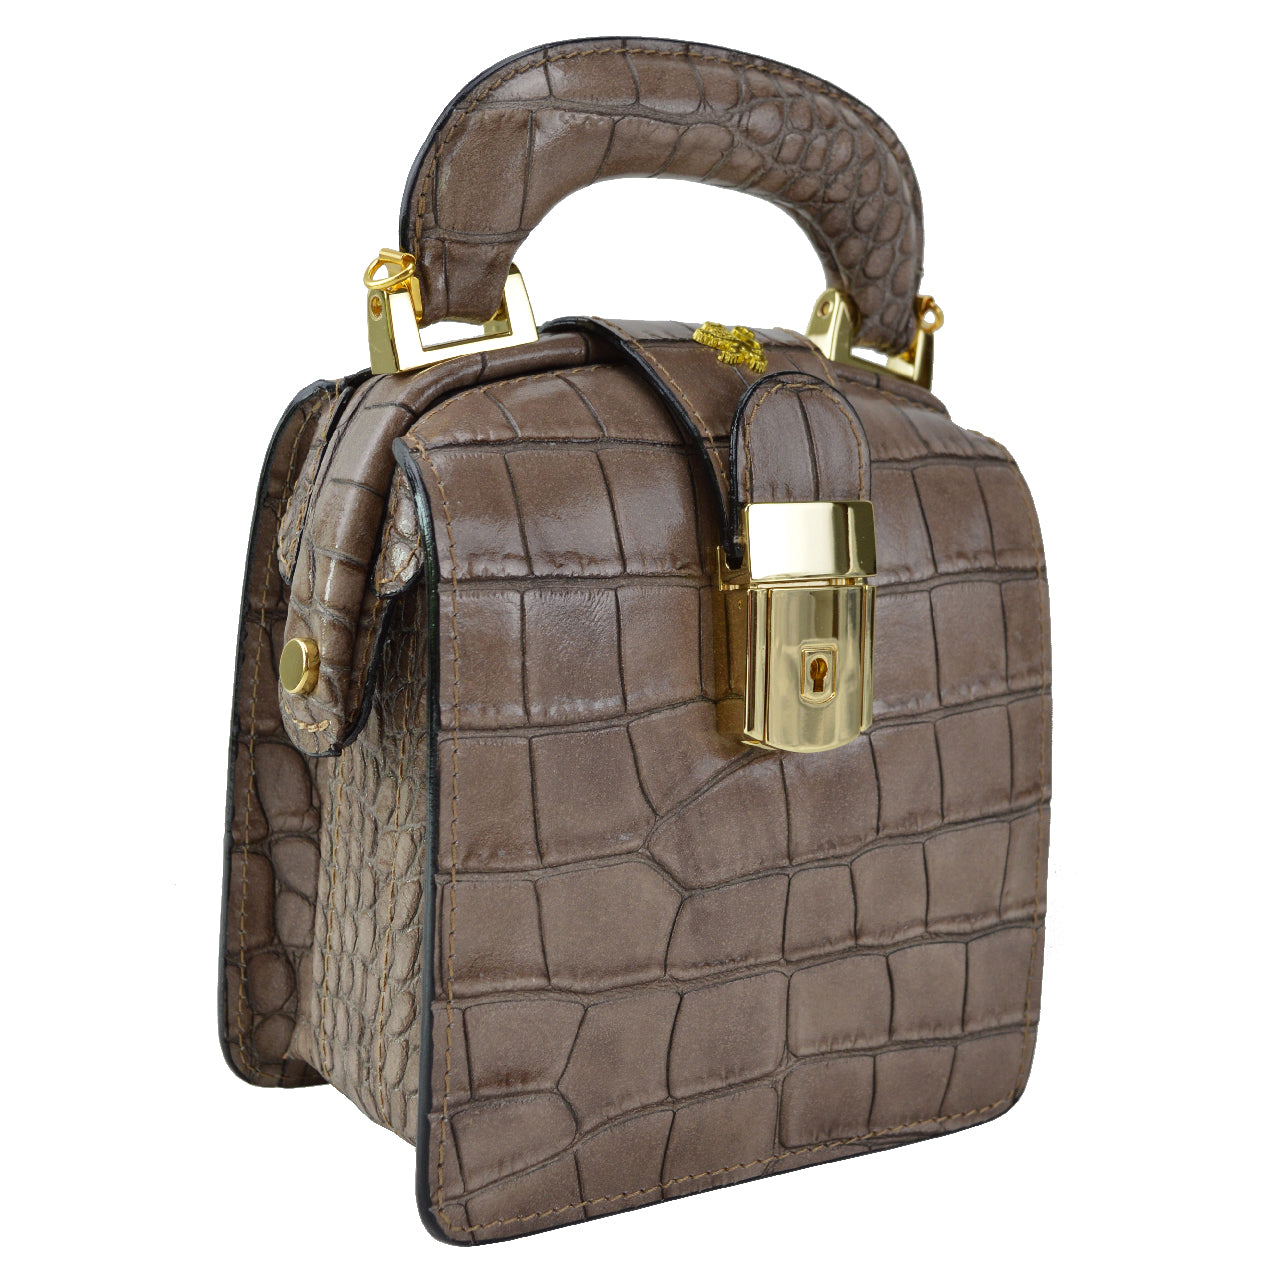 Pratesi Brunelleschi Handbag in genuine Italian leather - Brunelleschi Cognac